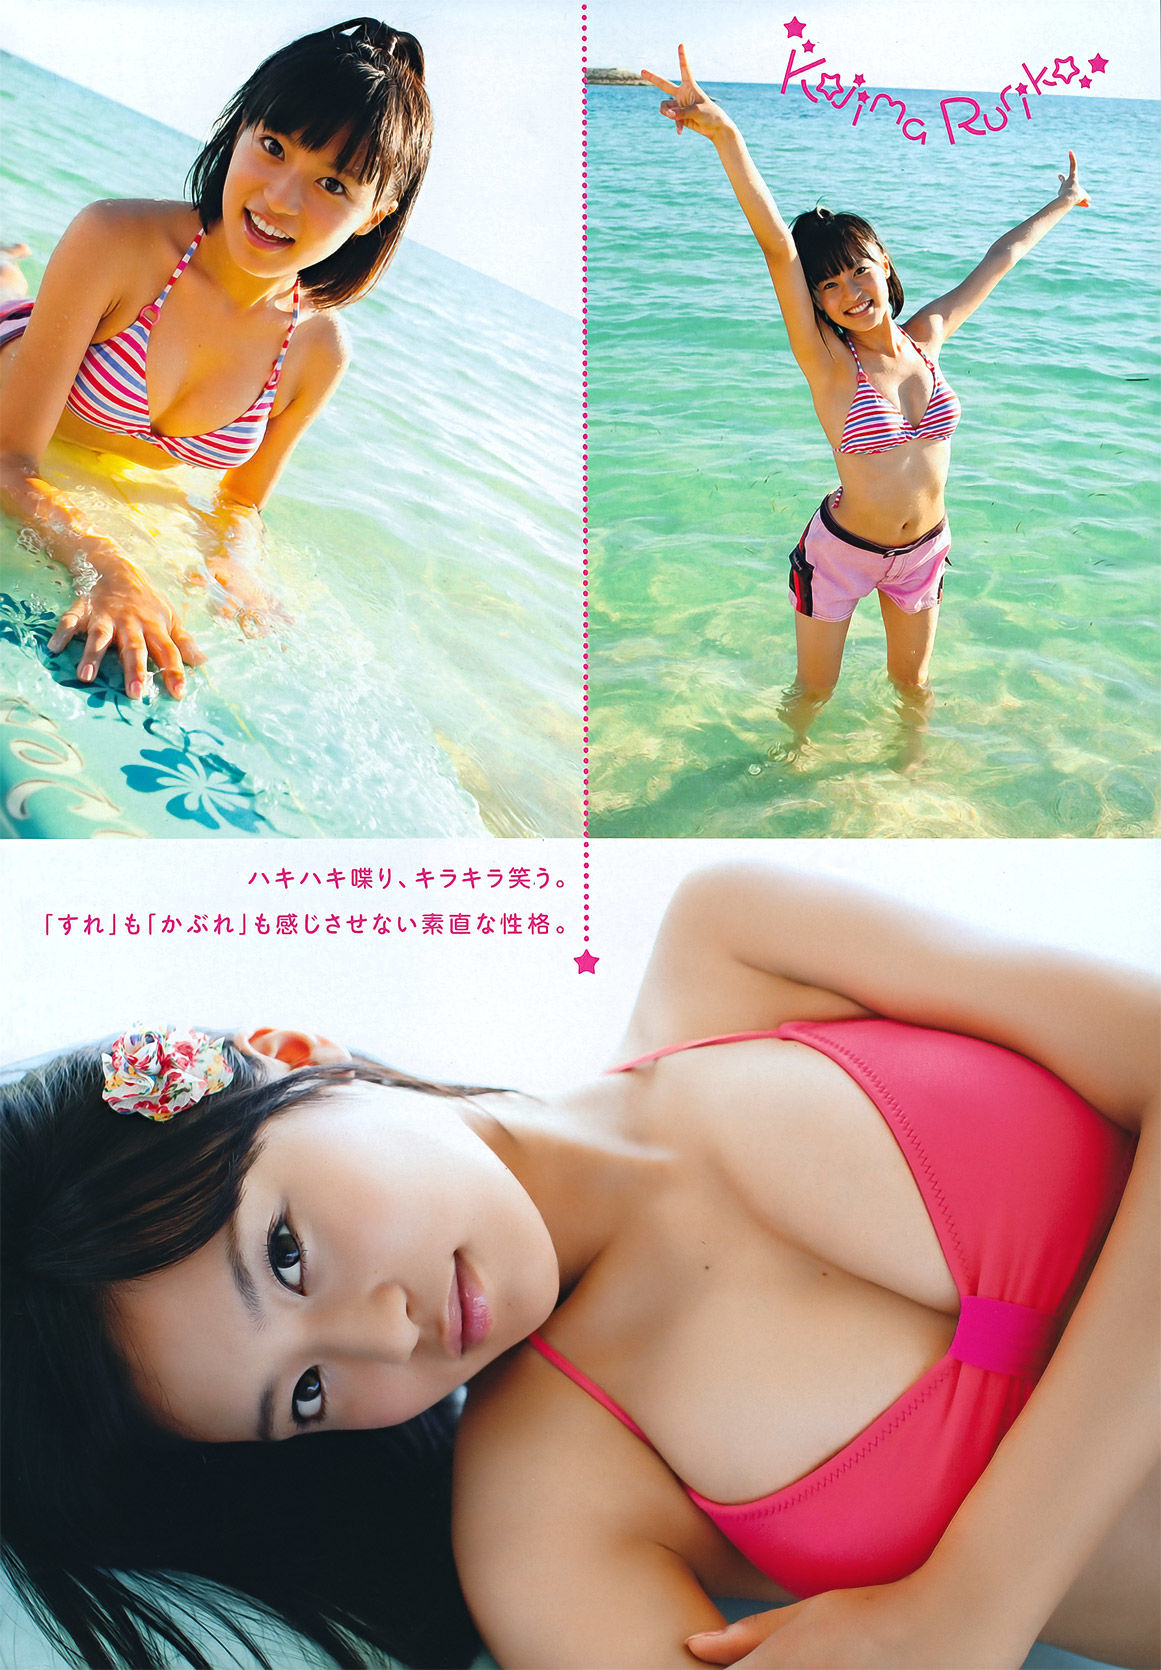 [Young Magazine] 2011年No.46 剛力彩芽 Ayame Gouriki